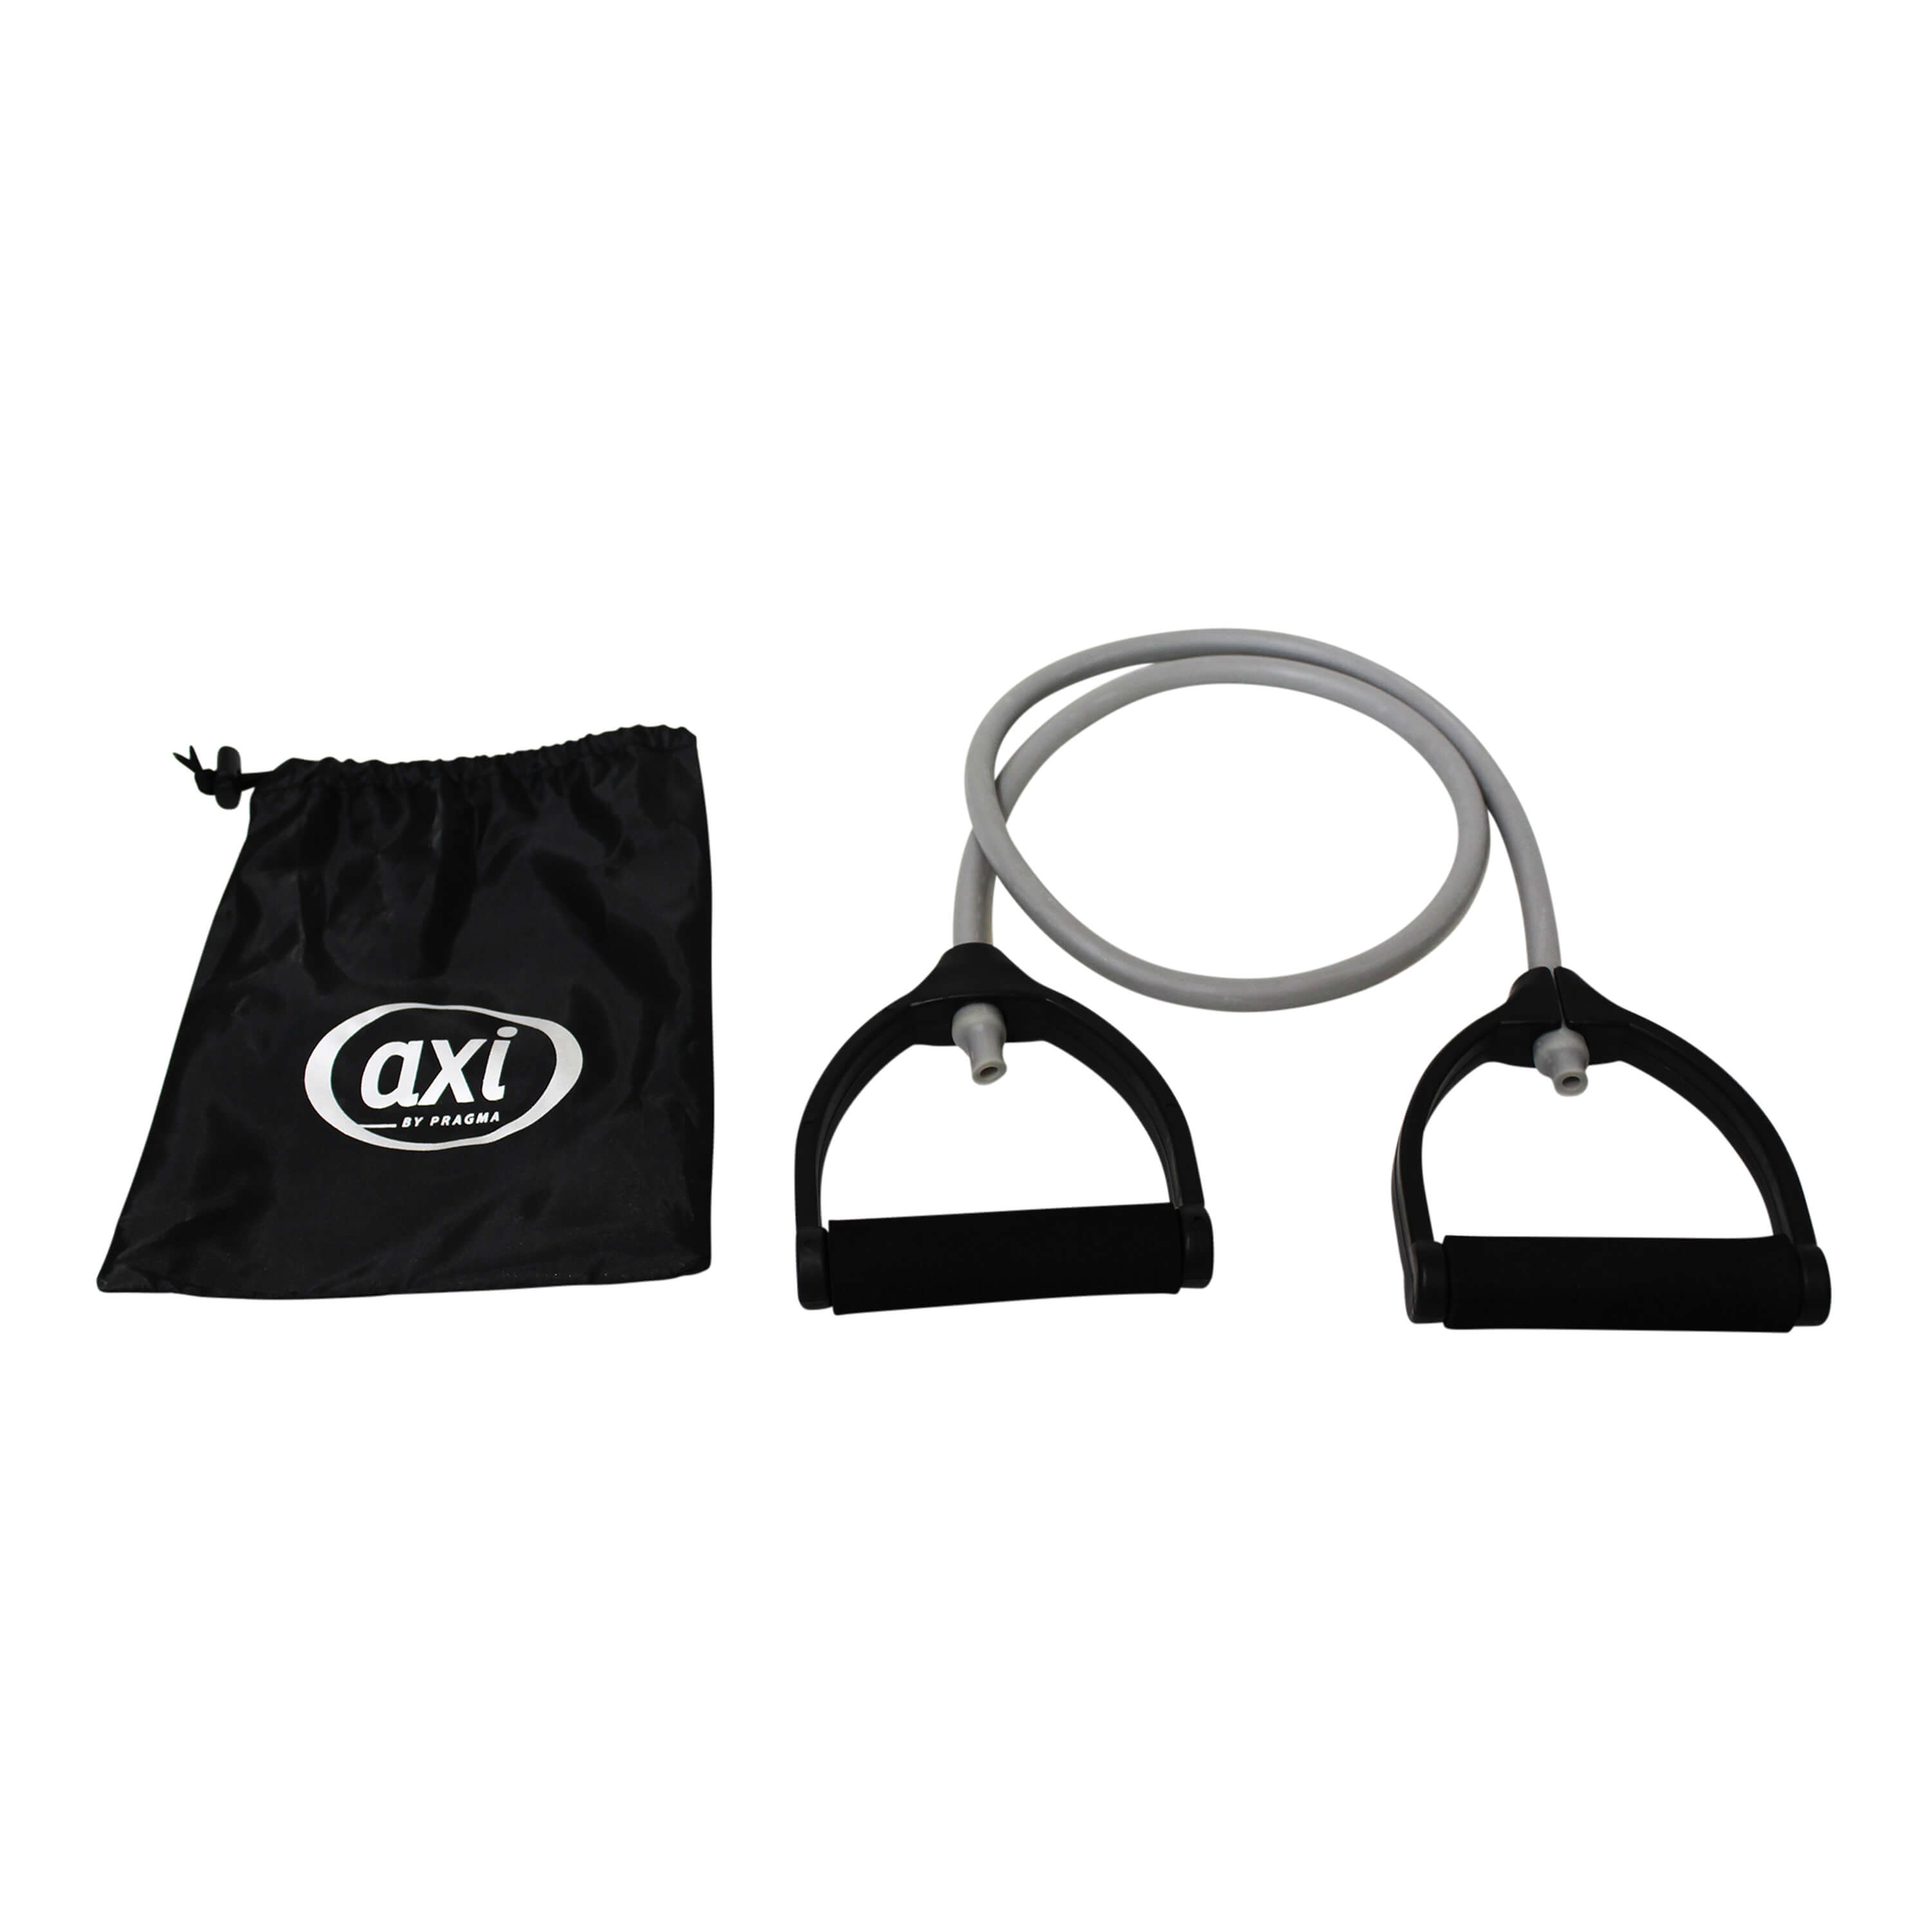 AXI Fitness Bag